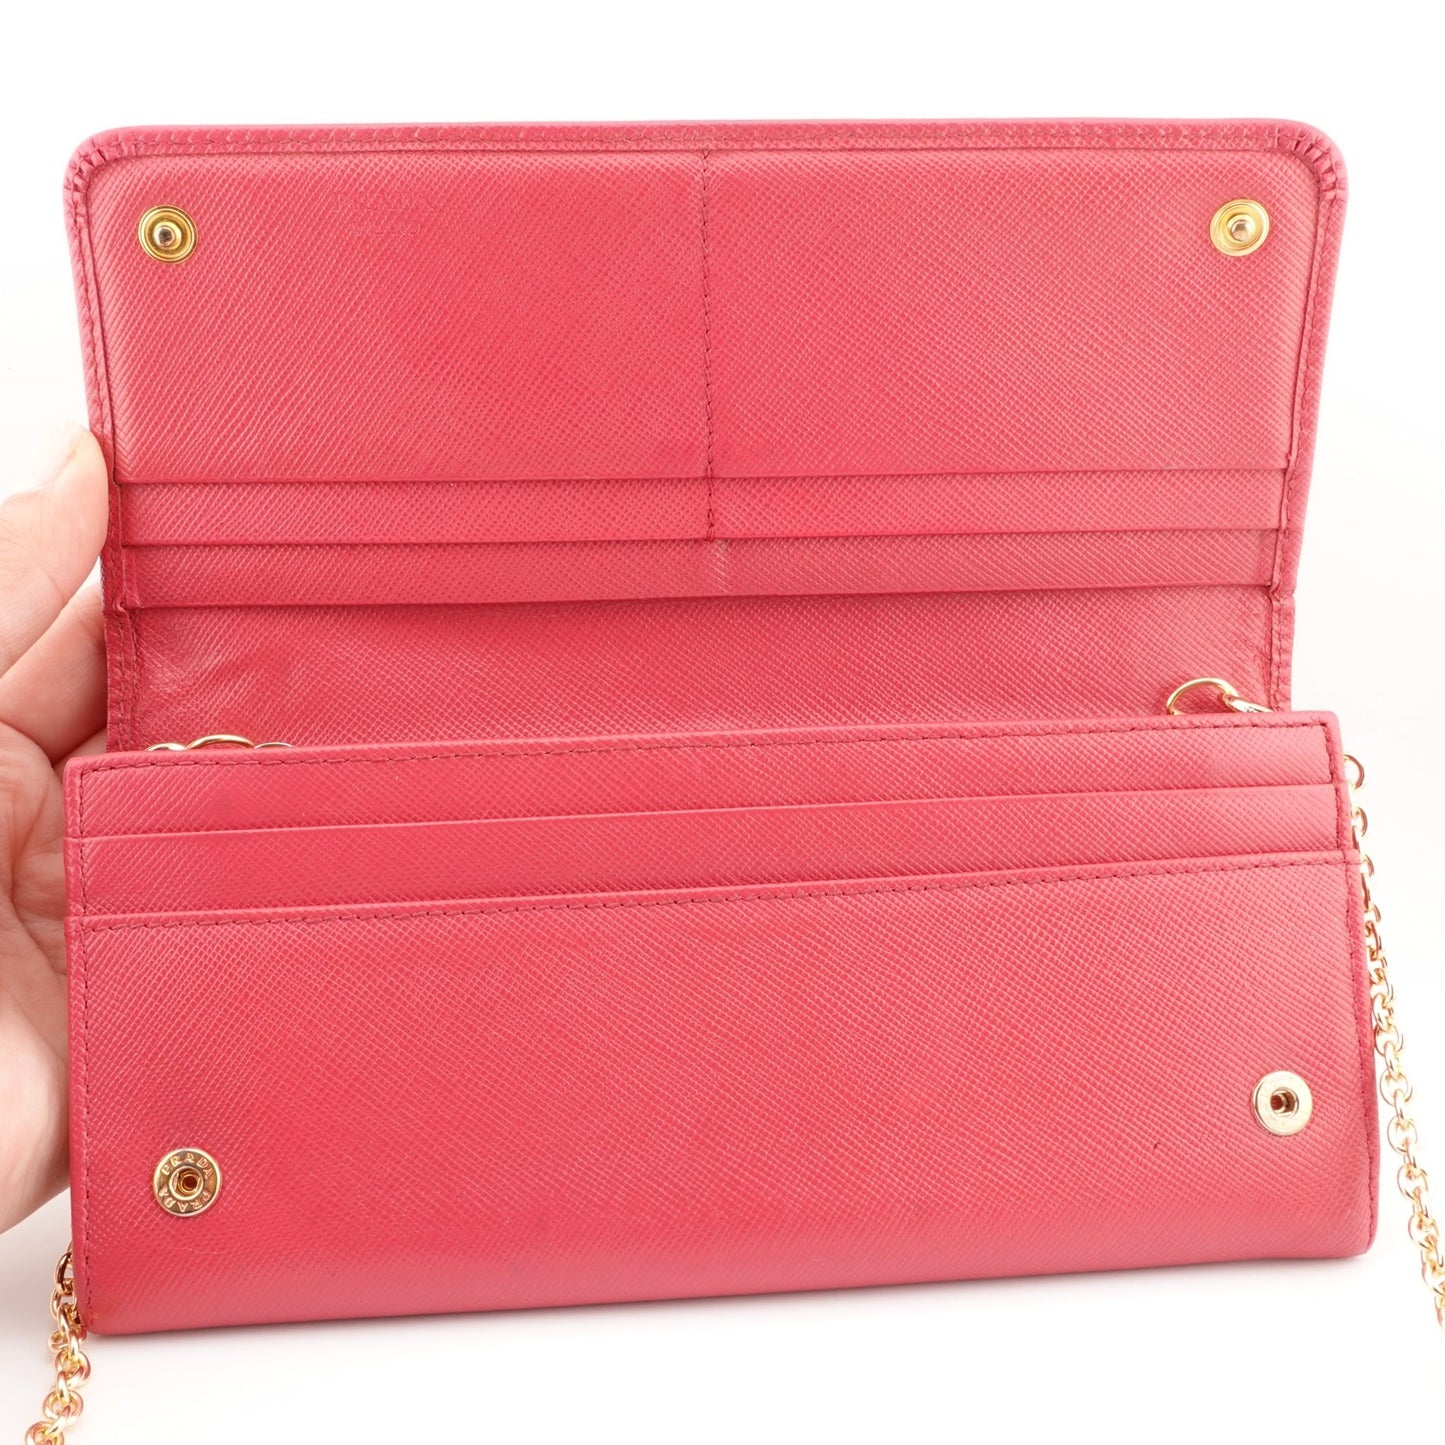 PRADA Saffiano Leather Wallet on Chain - Bag Envy